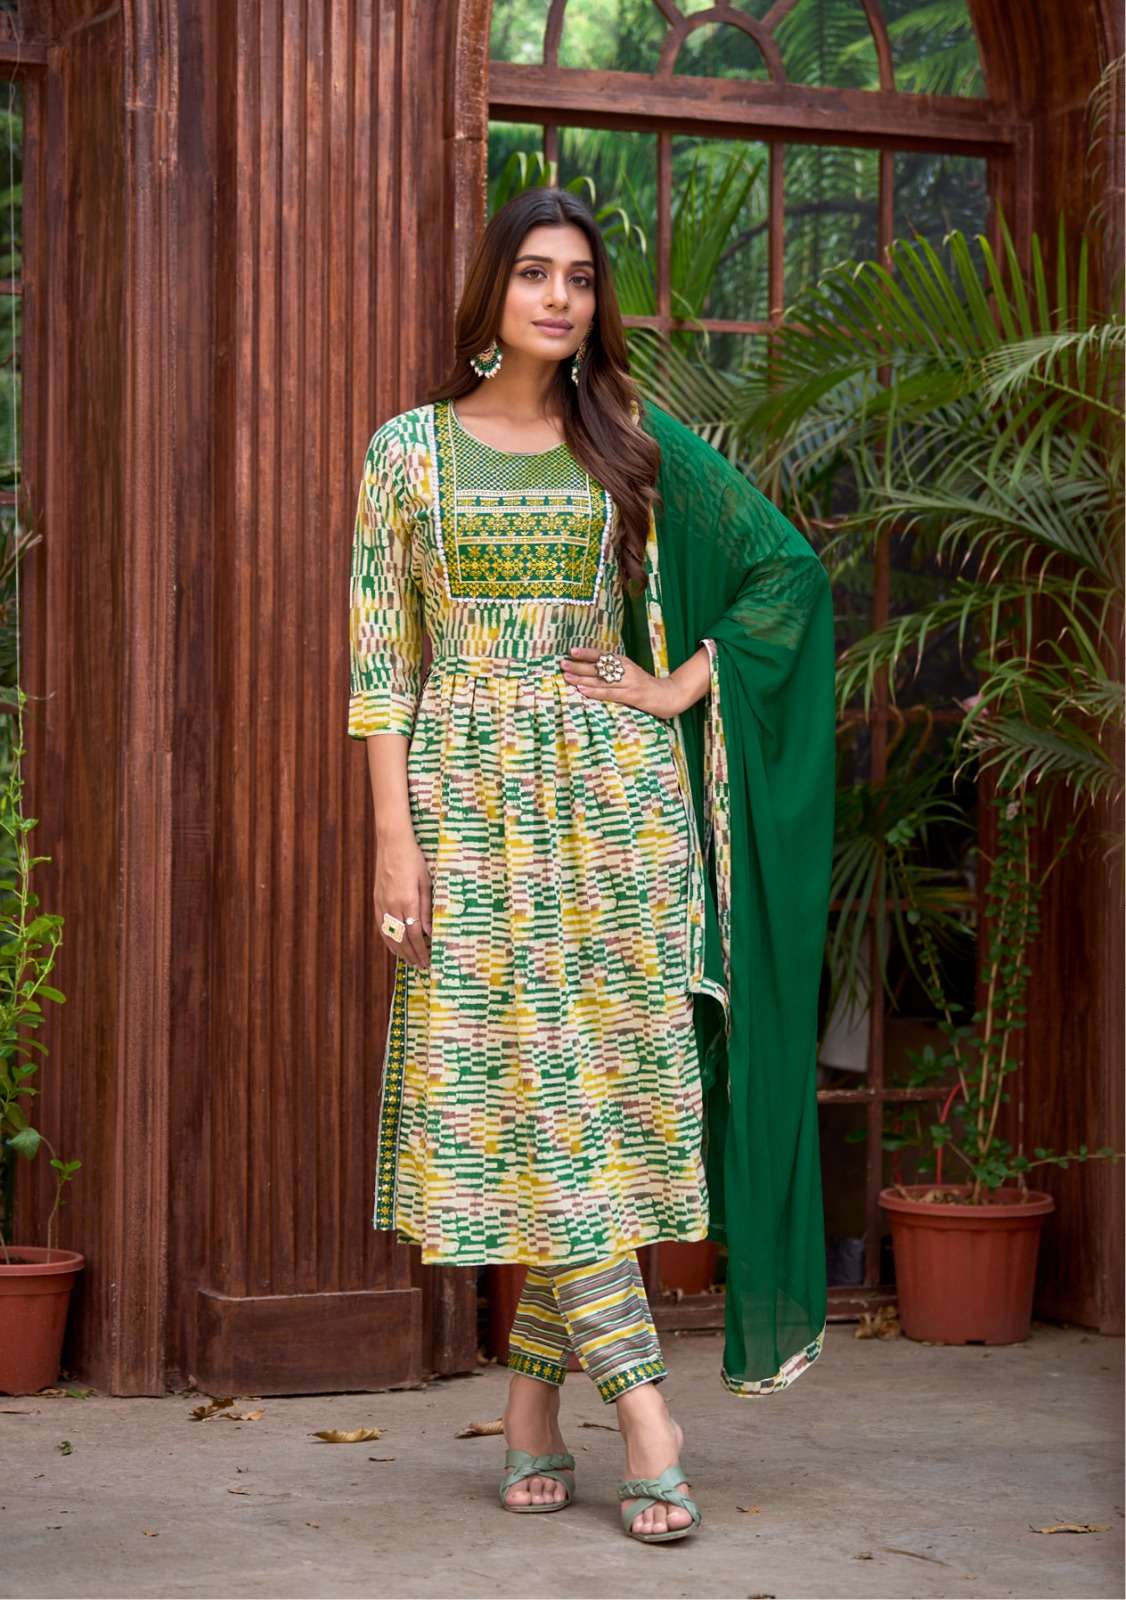 Beautiful Gujarati Dresses Design|2020|Gujrati Dress Ideas| - YouTube